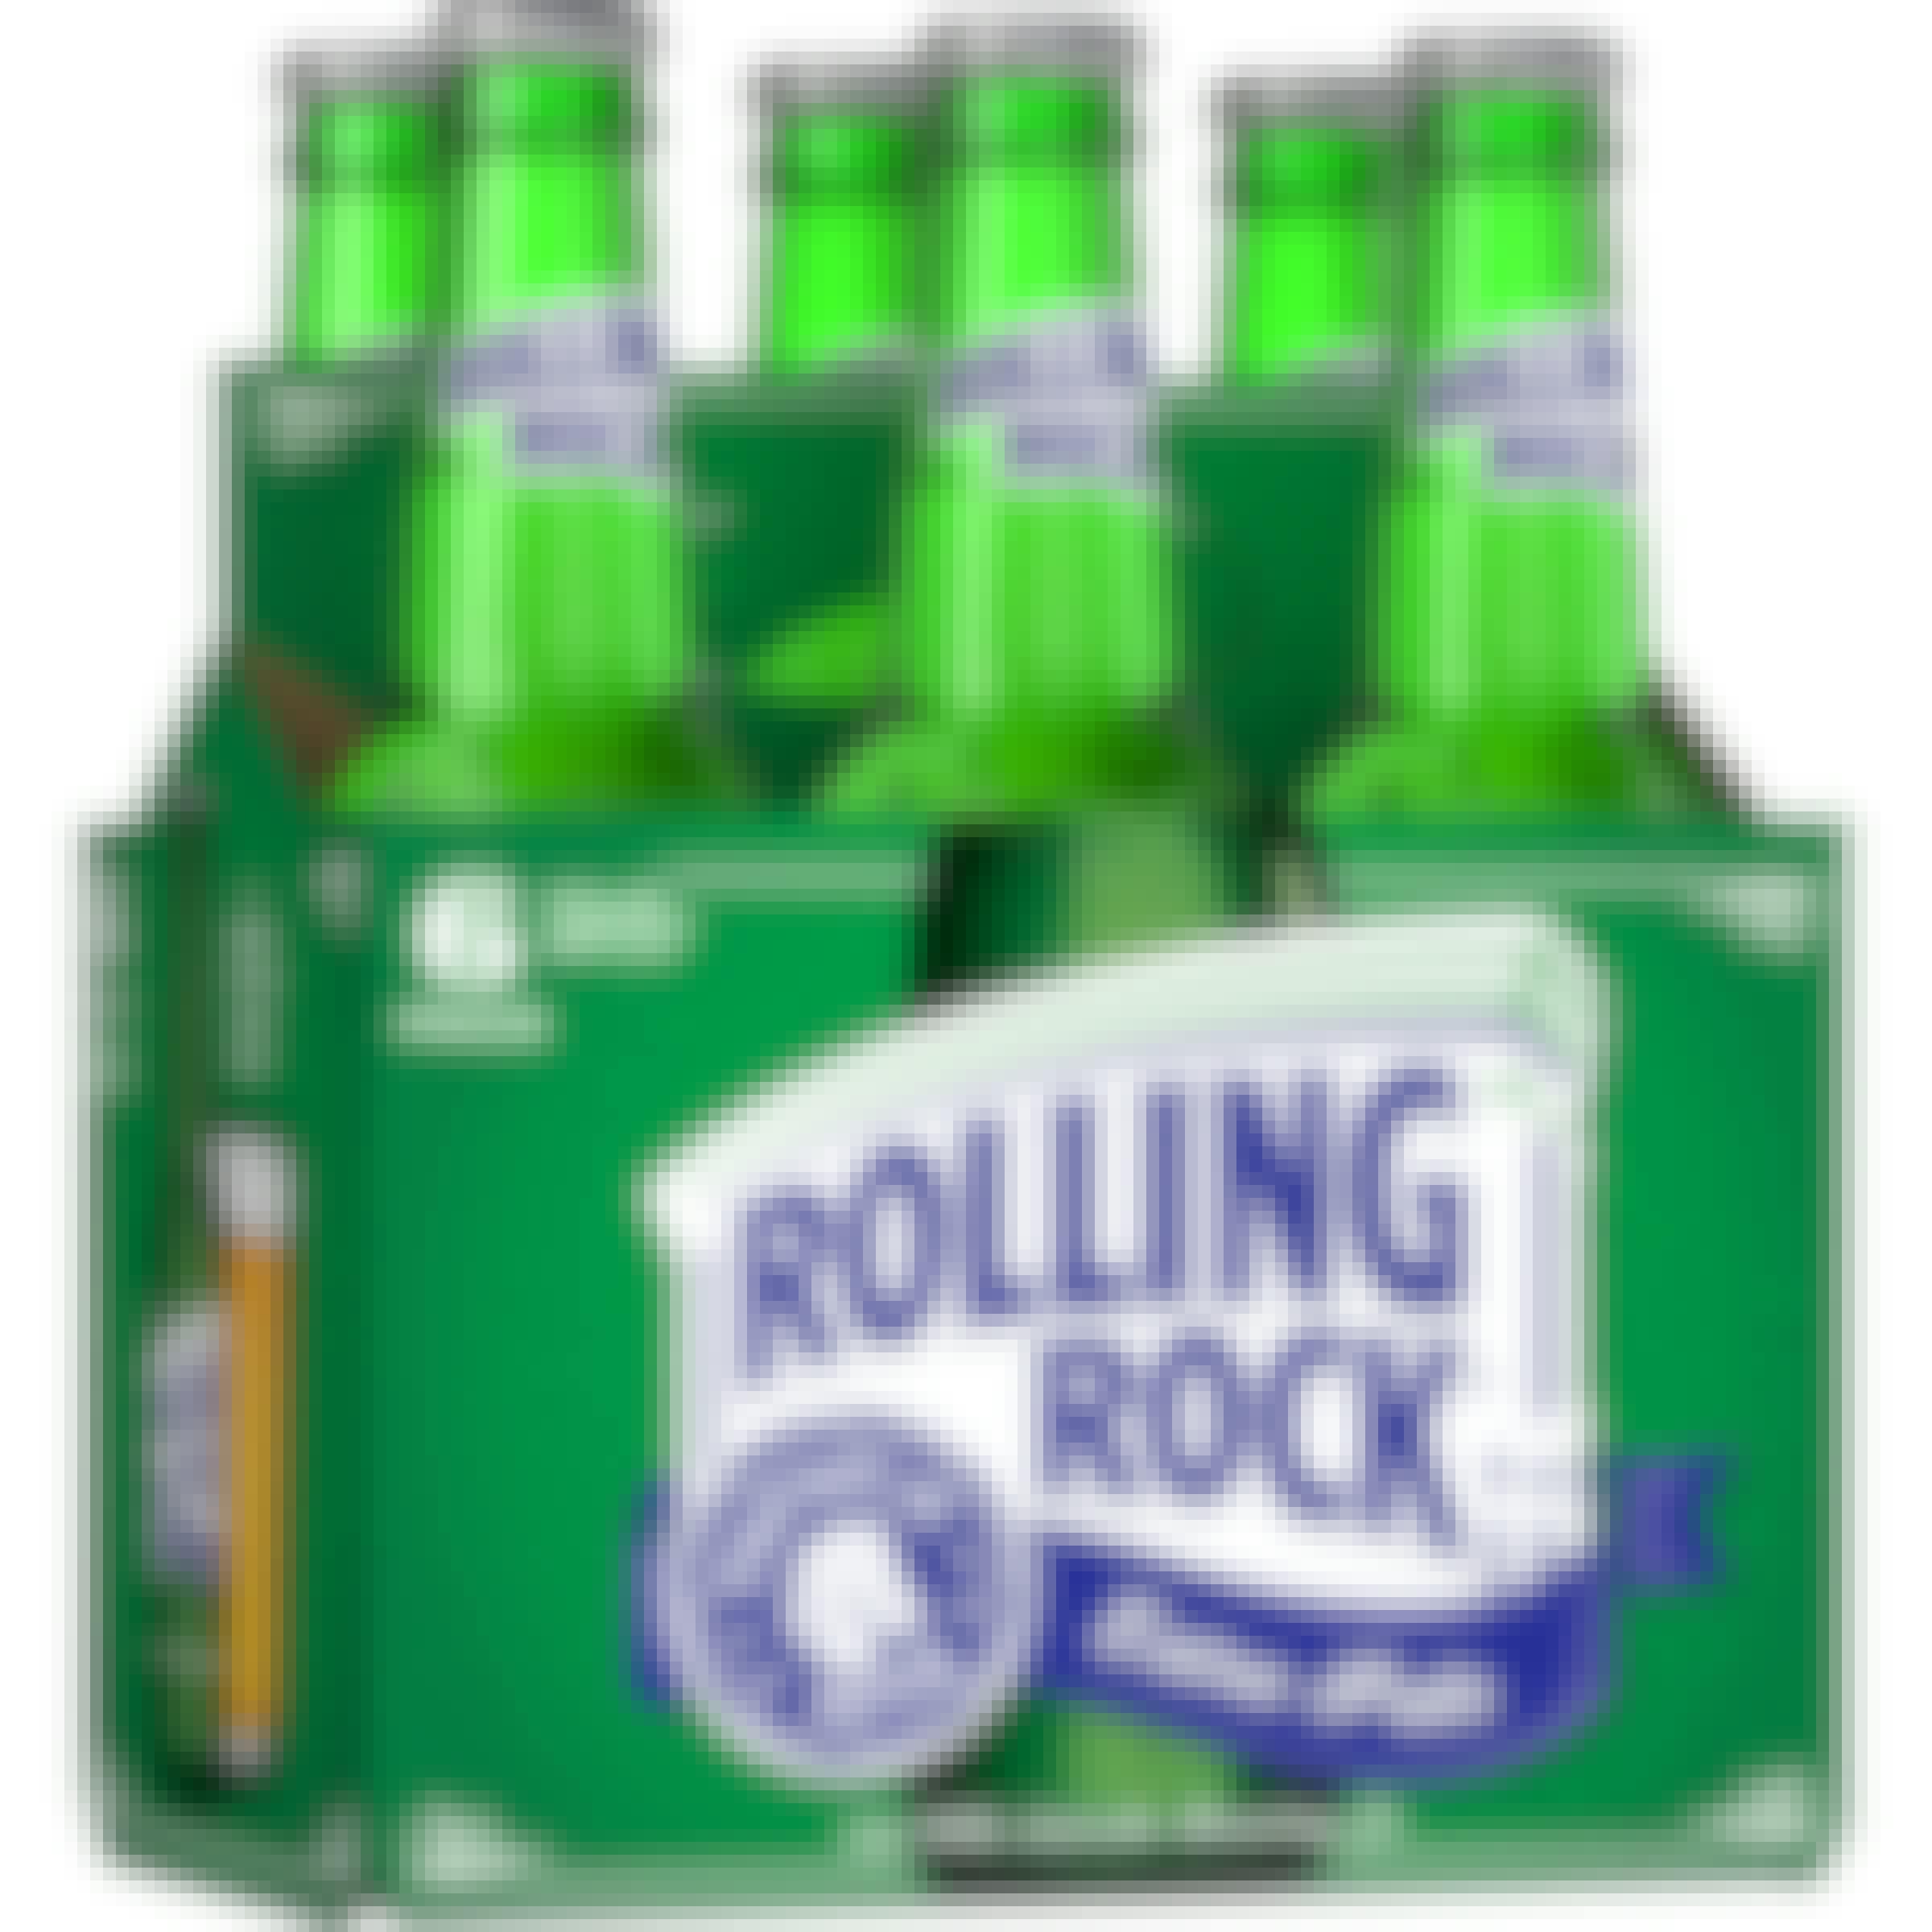 Rolling Rock Extra Pale Lager 6 pack 12 oz. Bottle